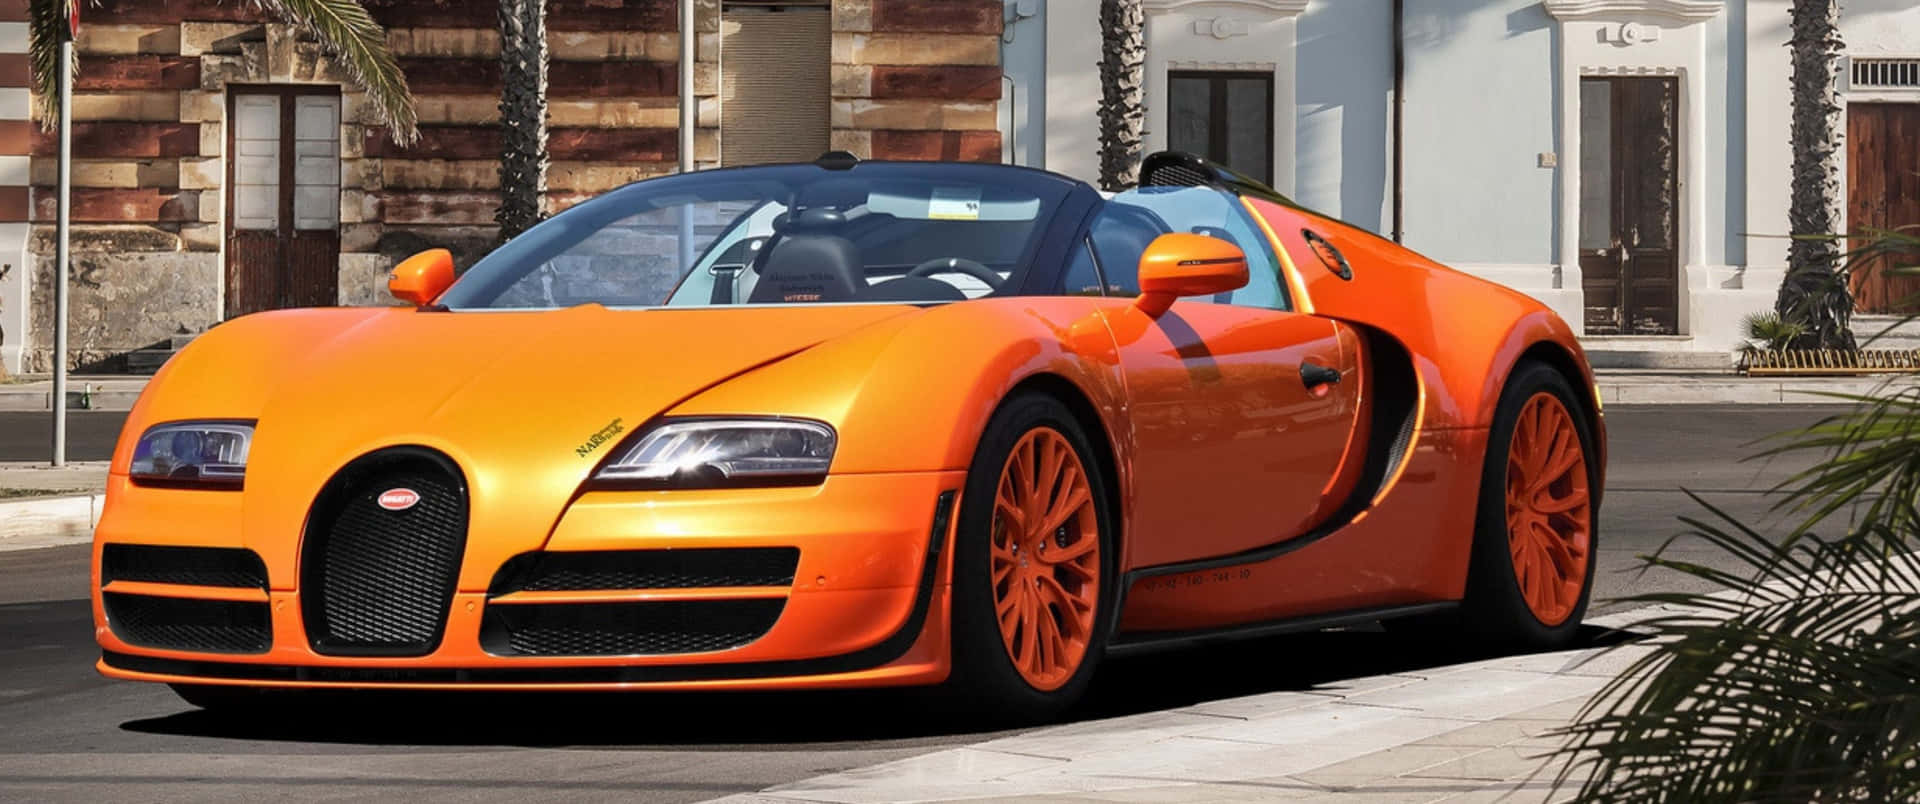 Bugatti Veyron Gt V - Wallpapers